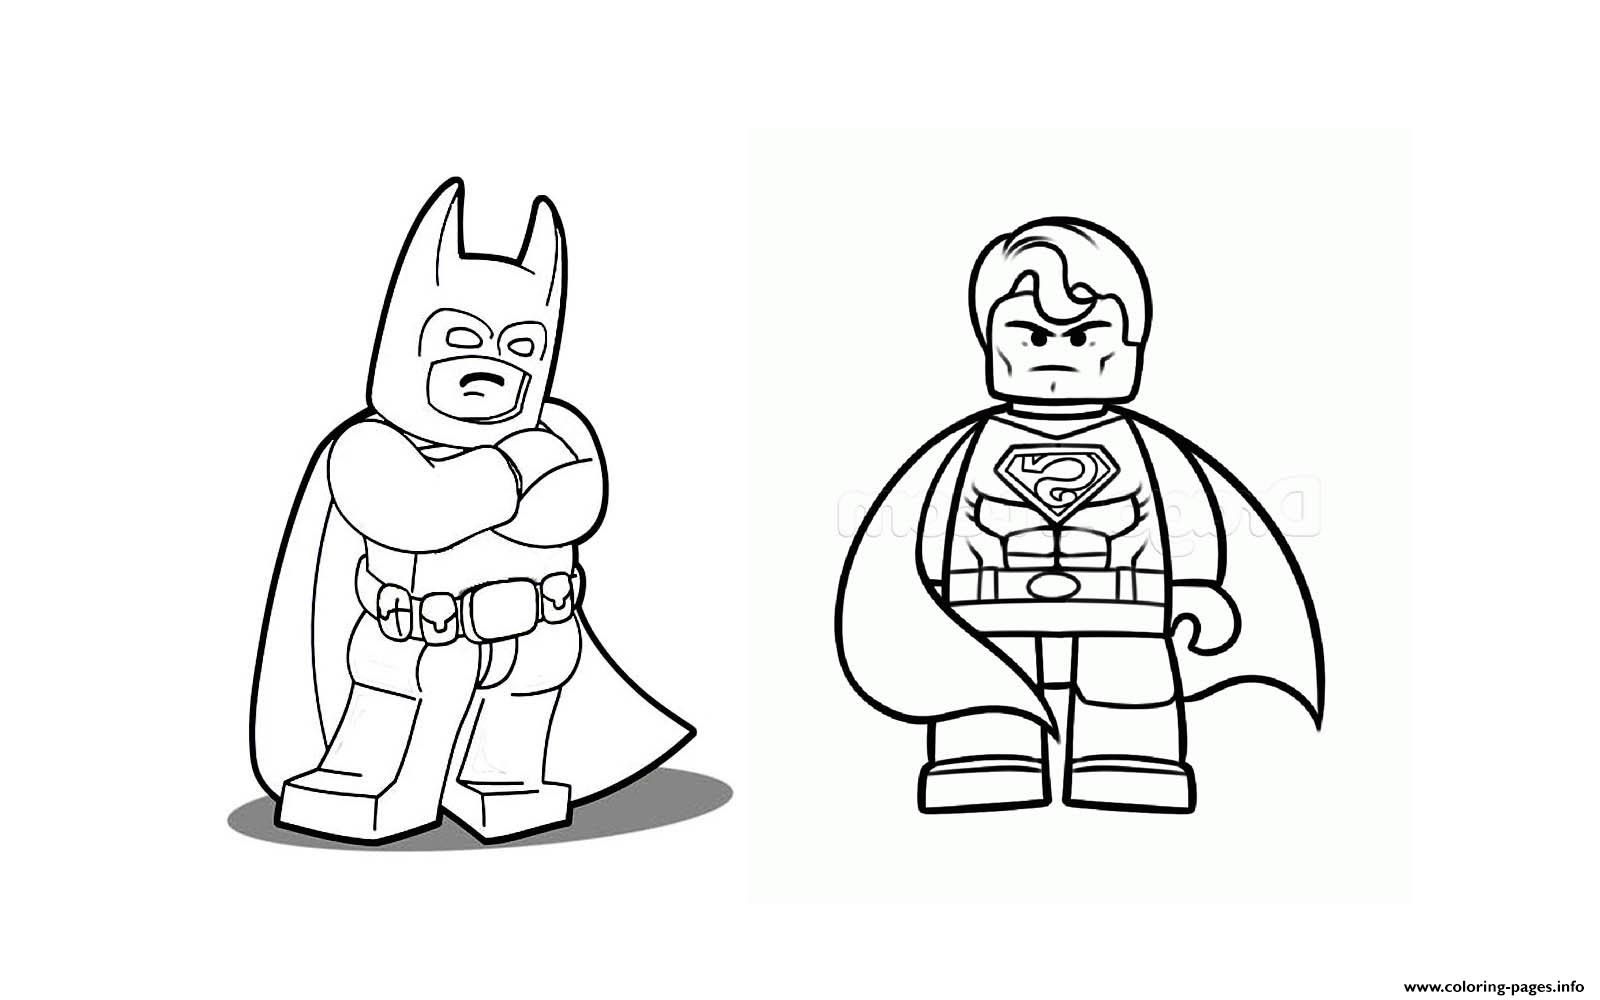 Lego Superheroes - Batman vs Superman | Coloring pages ...